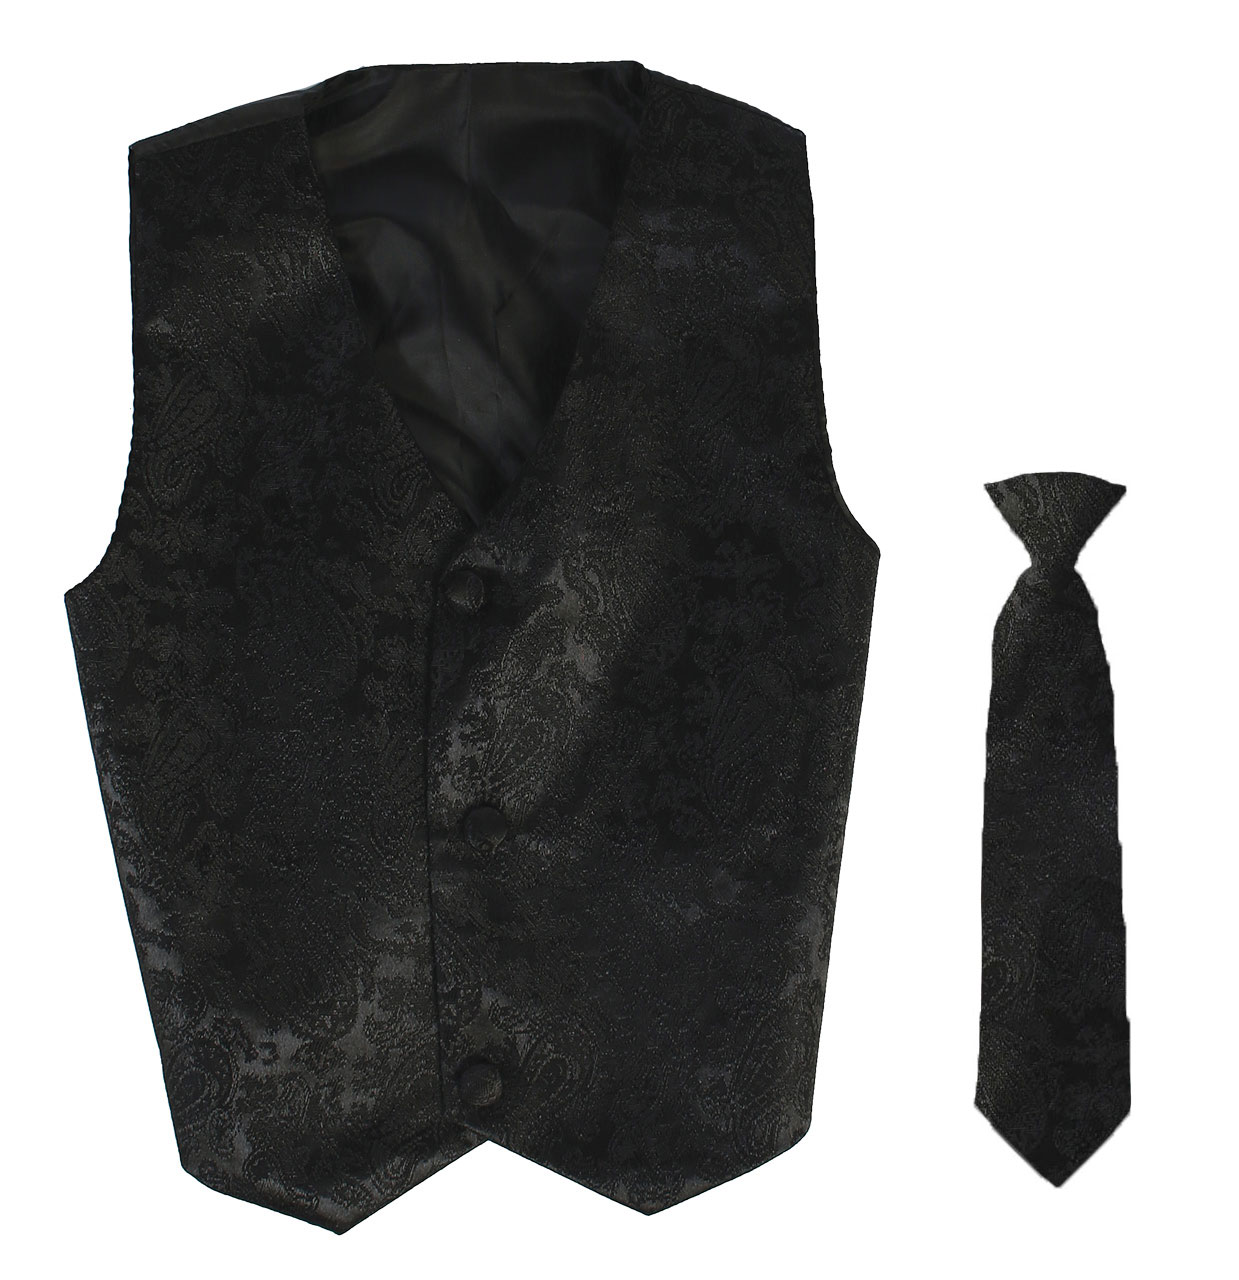 Vest and Clip On Boy Necktie set - Black Paisley - 8/10